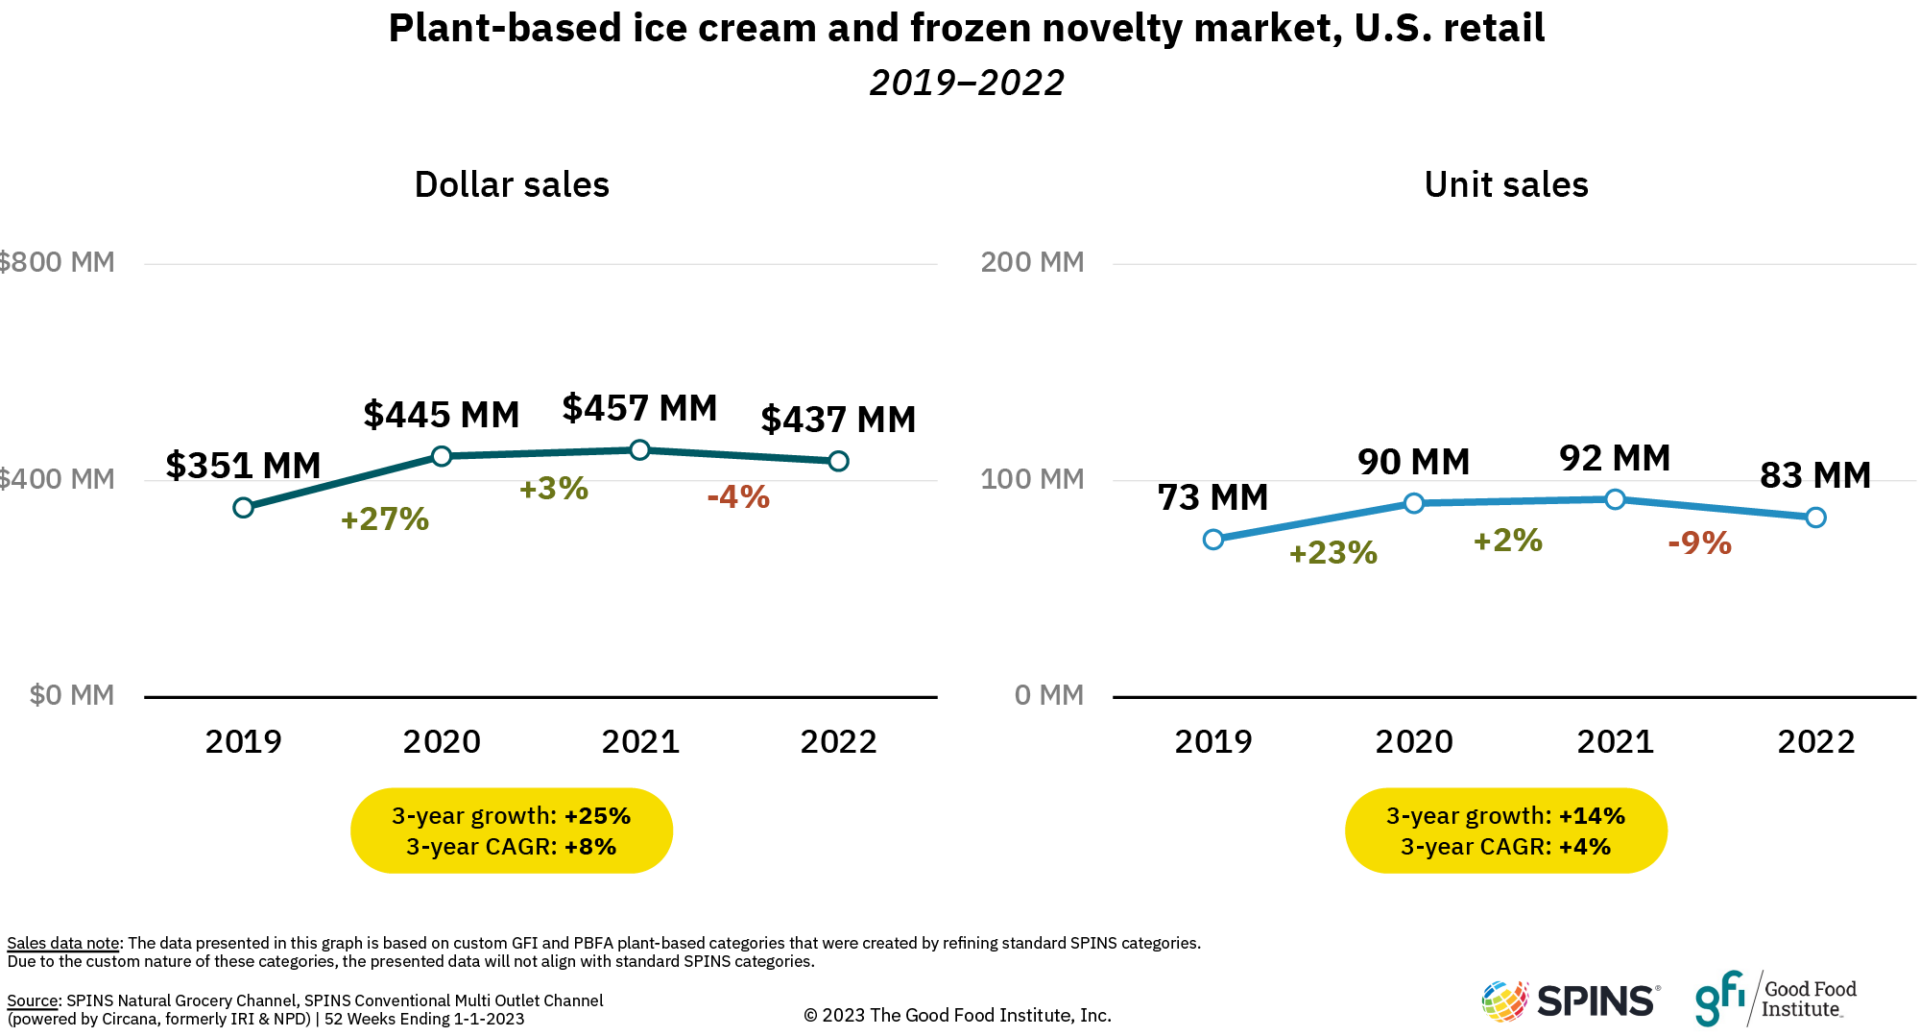 Summary of plant-based ice cream and frozen novelty sales data